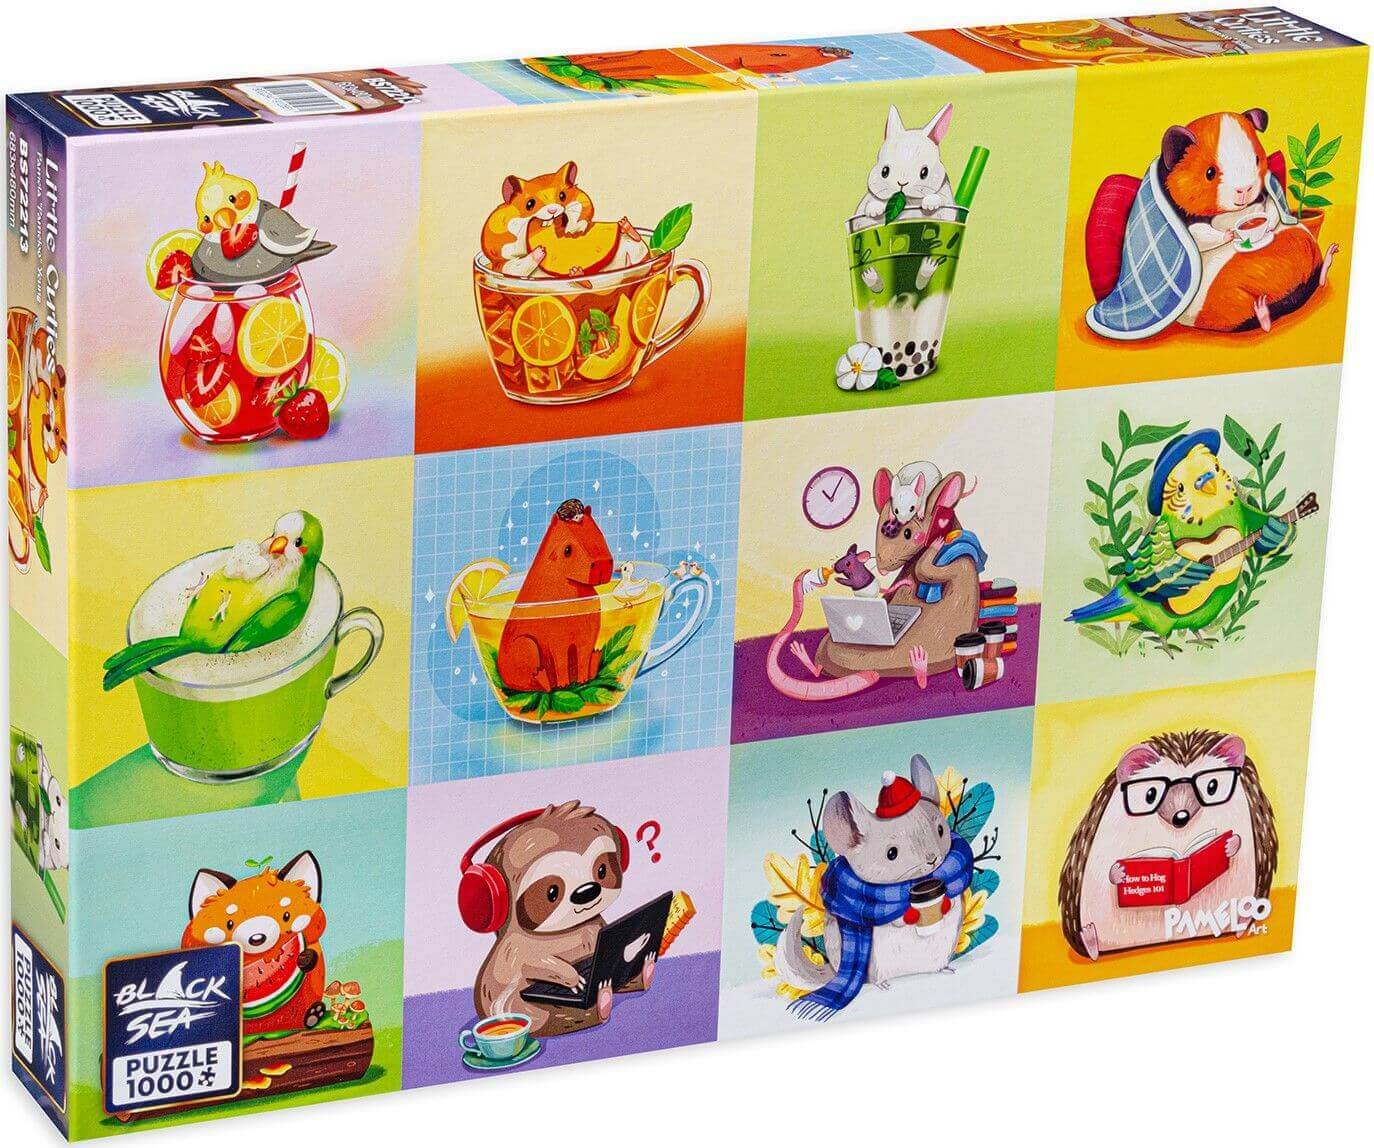 Puzzle Black Sea Premium 1000 pieces - Little Cuties